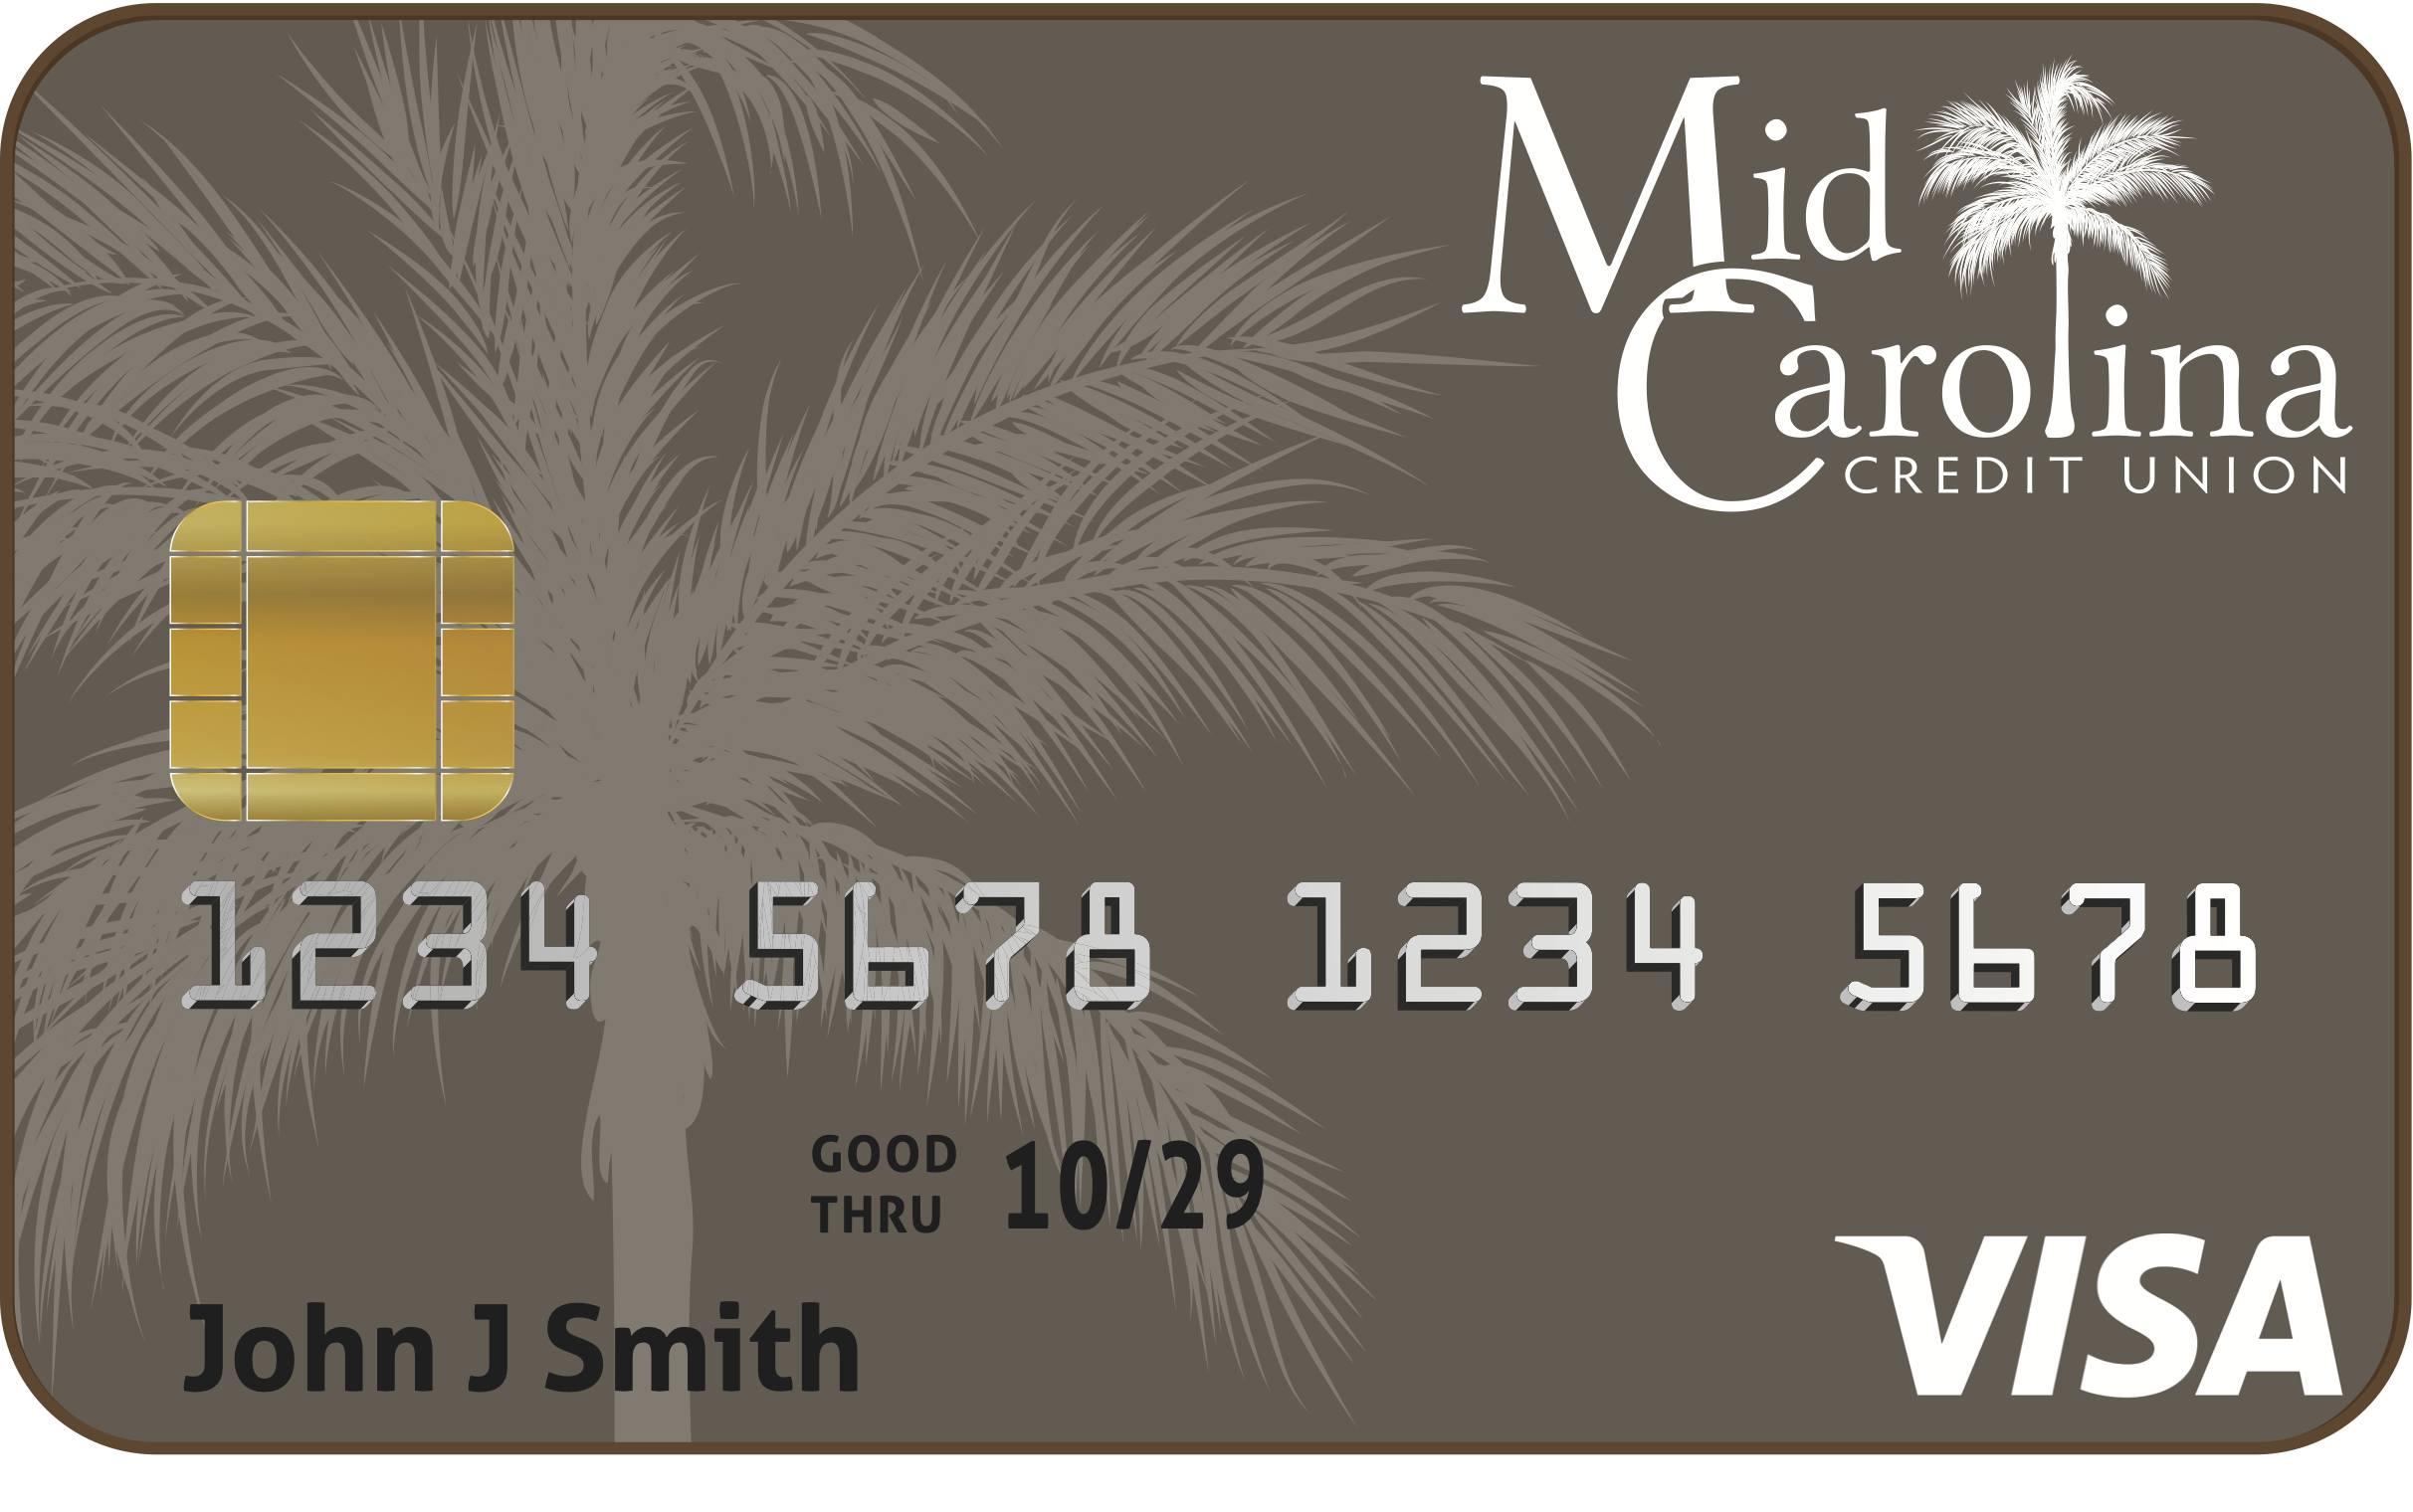 Visa Classic from Mid Carolina Credit Union